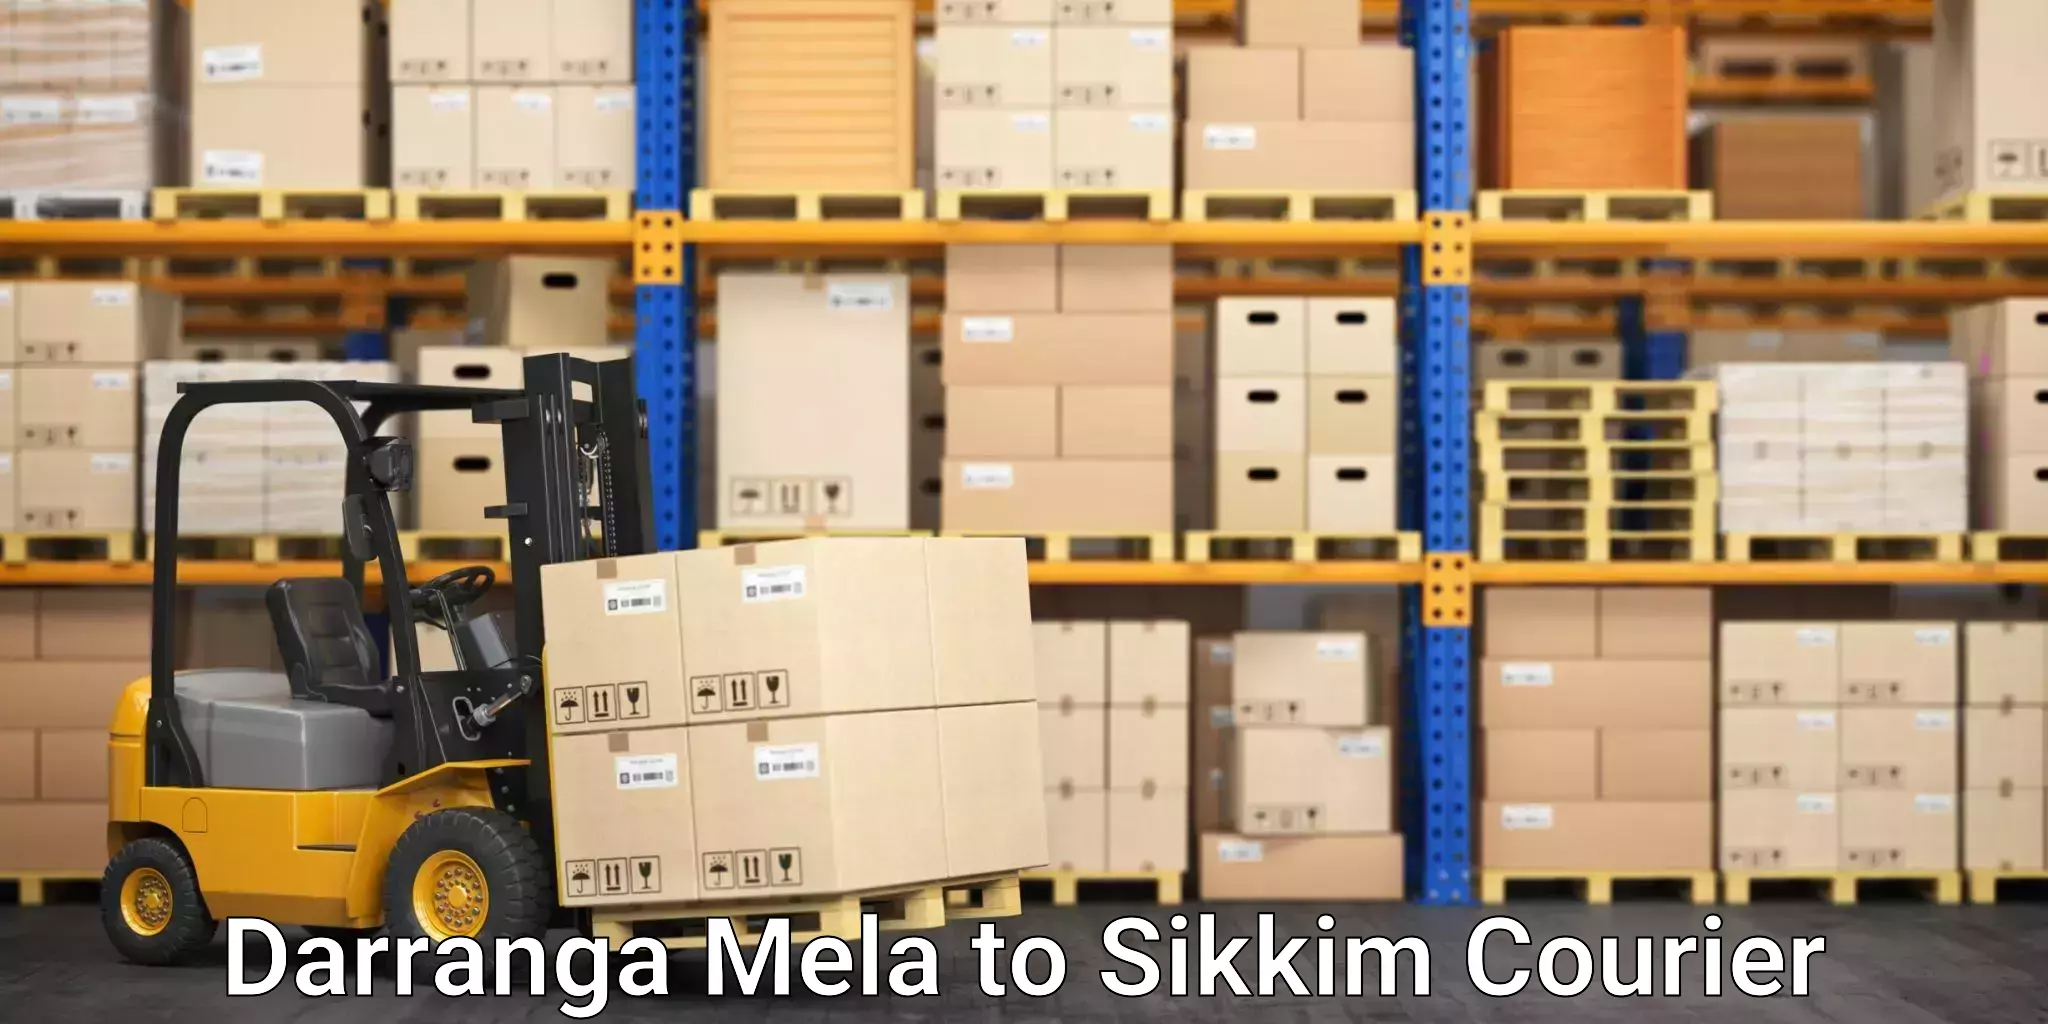 Next-day delivery options Darranga Mela to South Sikkim